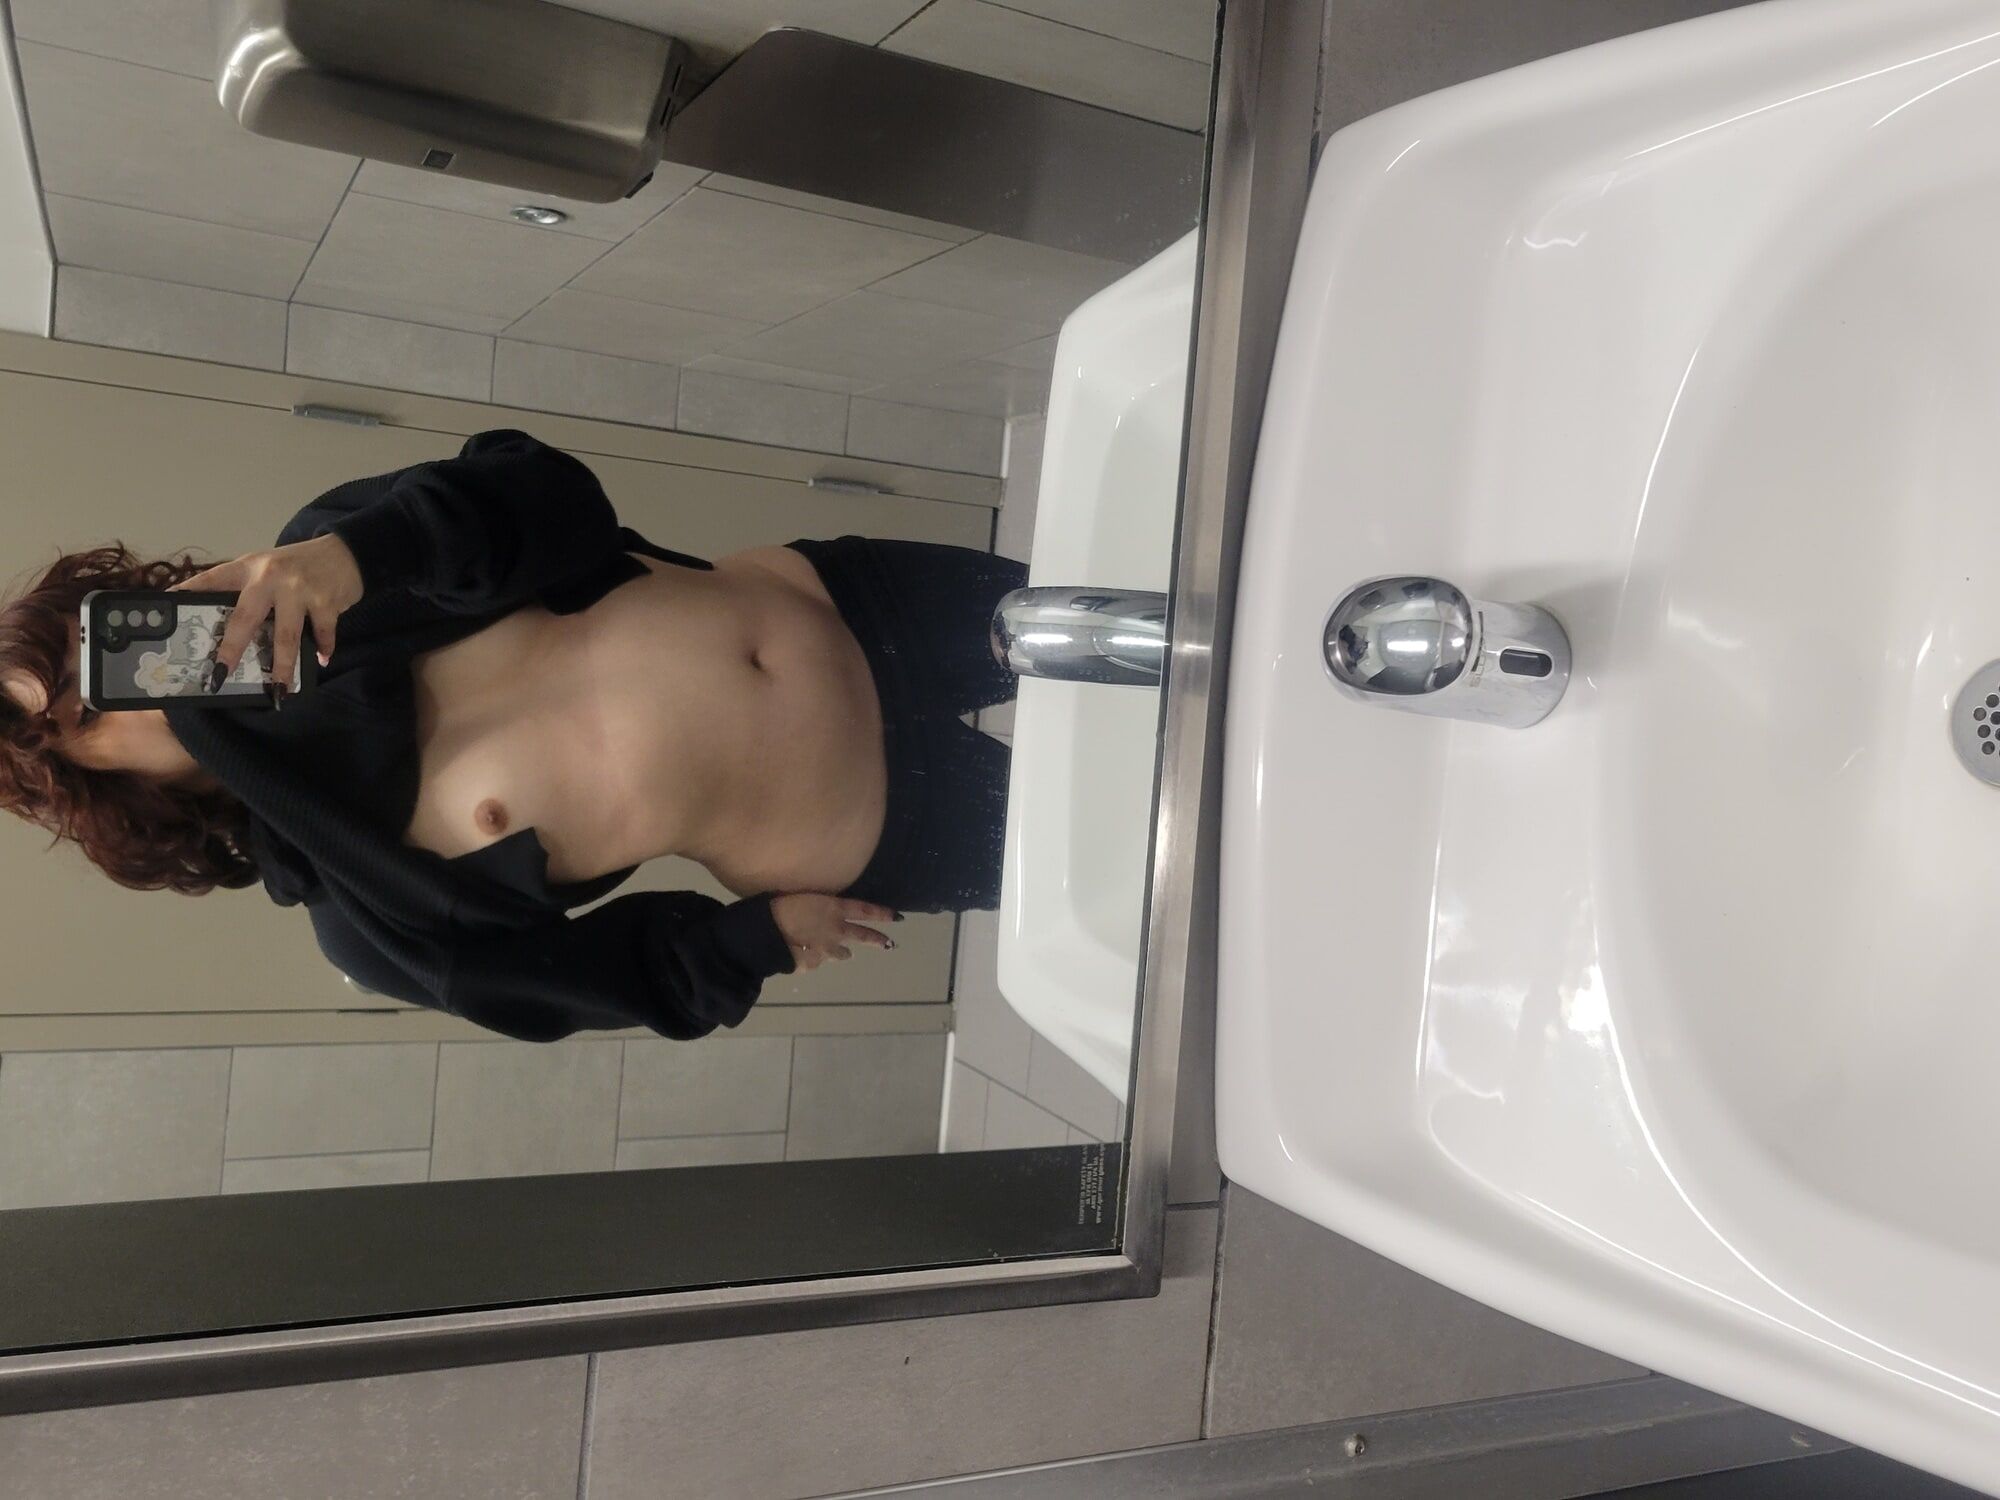 Quick Aldi bathroom selfies #5